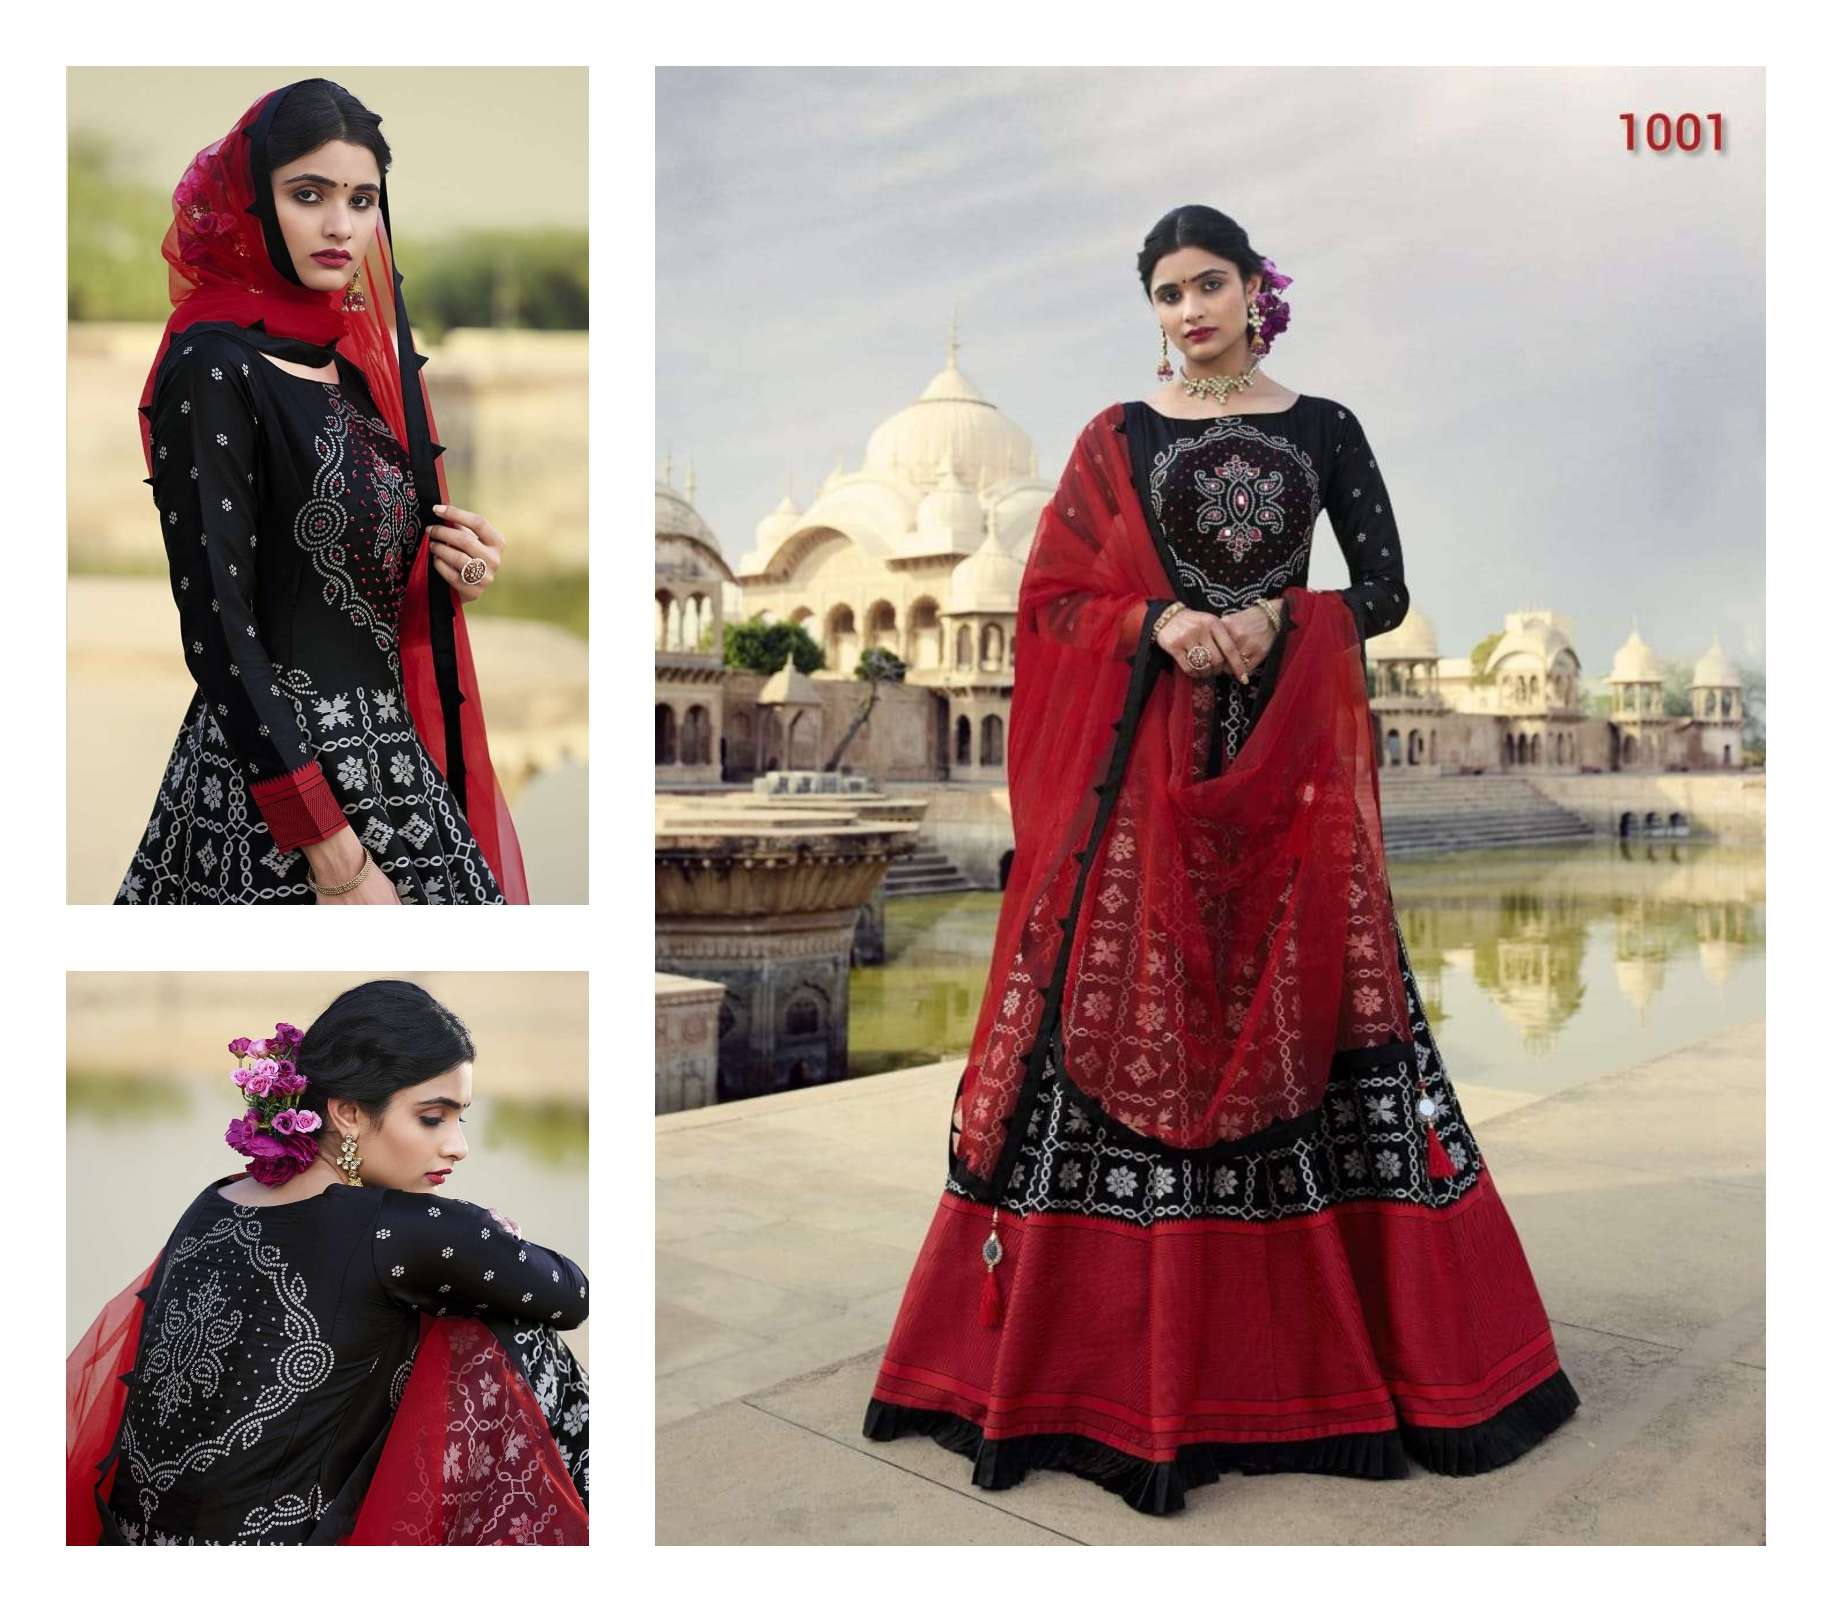 Grammys Fashion: Cardi B Showed Up In This Indian Designer's Dress